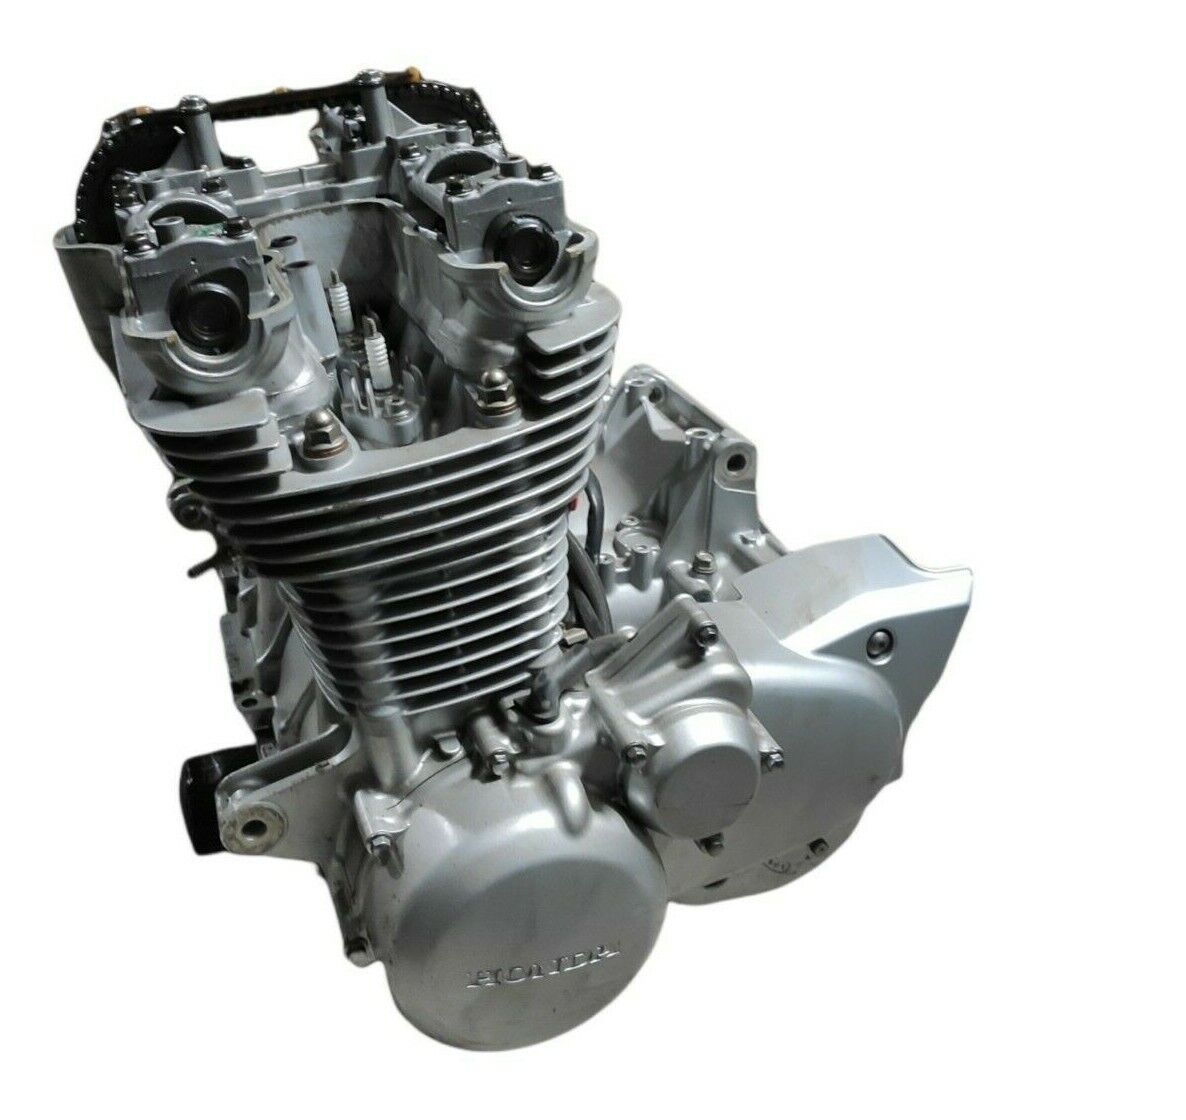 Block Engine Honda CB 1100 Rs 2017 Code sc65e10298 Km Working Guaranteed